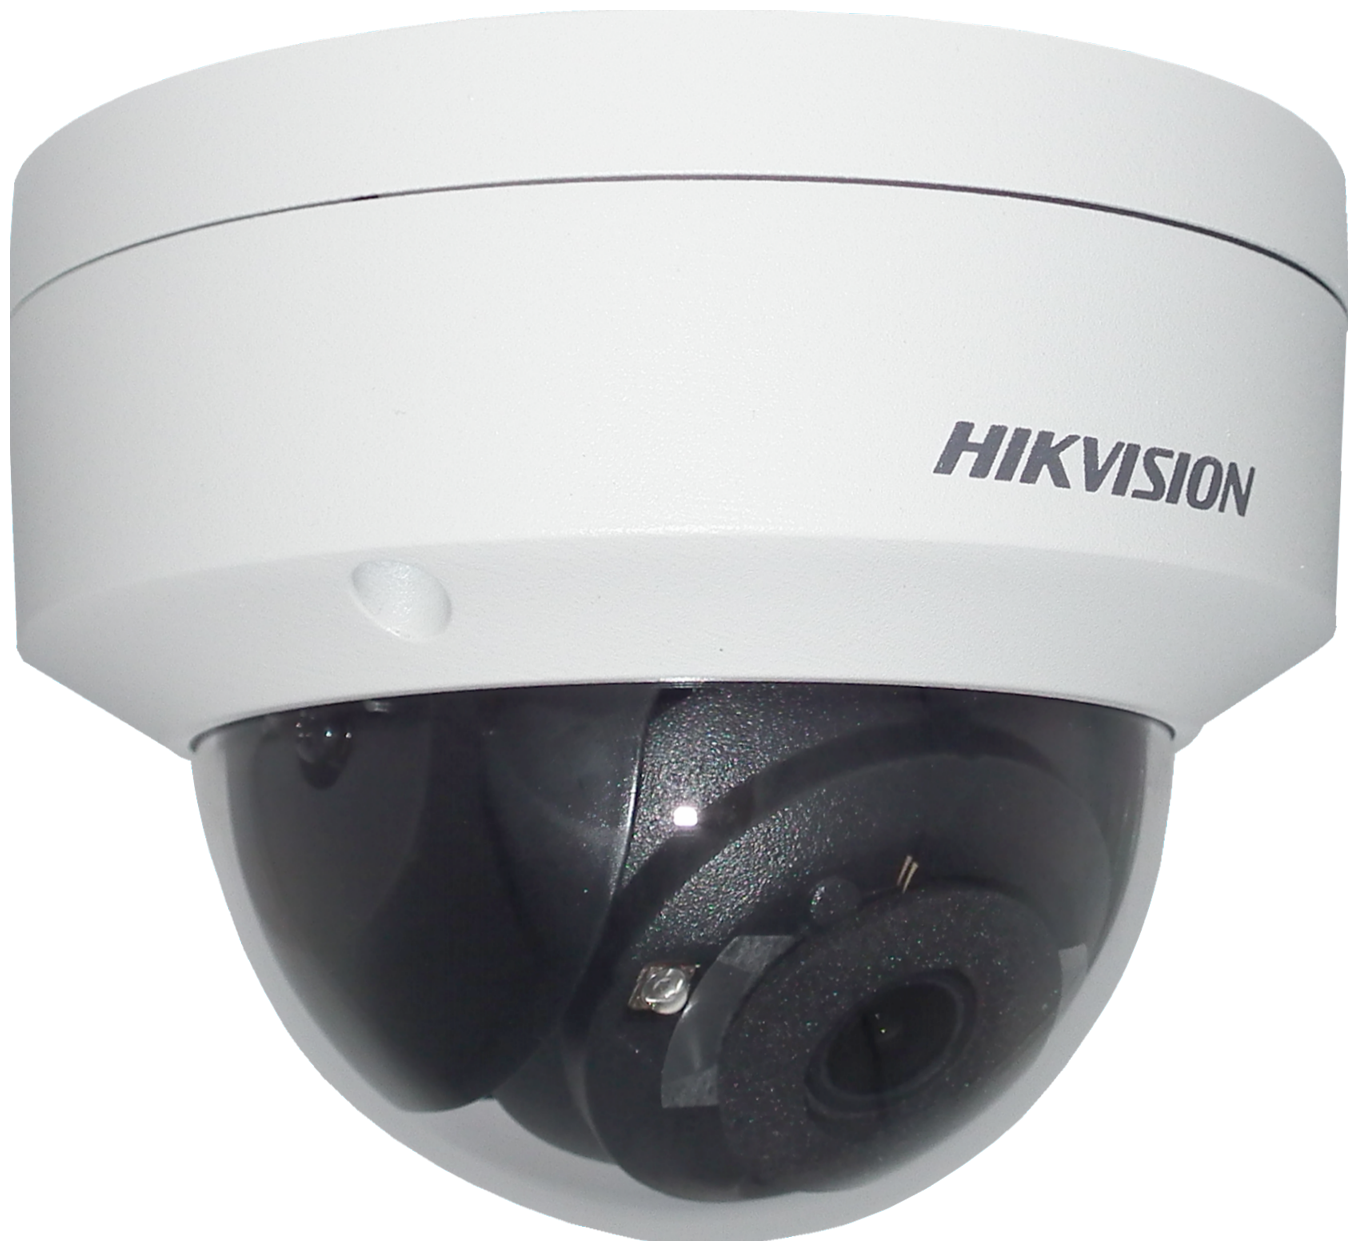 Камера видеонаблюдения Hikvision DS-2CE56H5T-VPITE (2.8 мм)